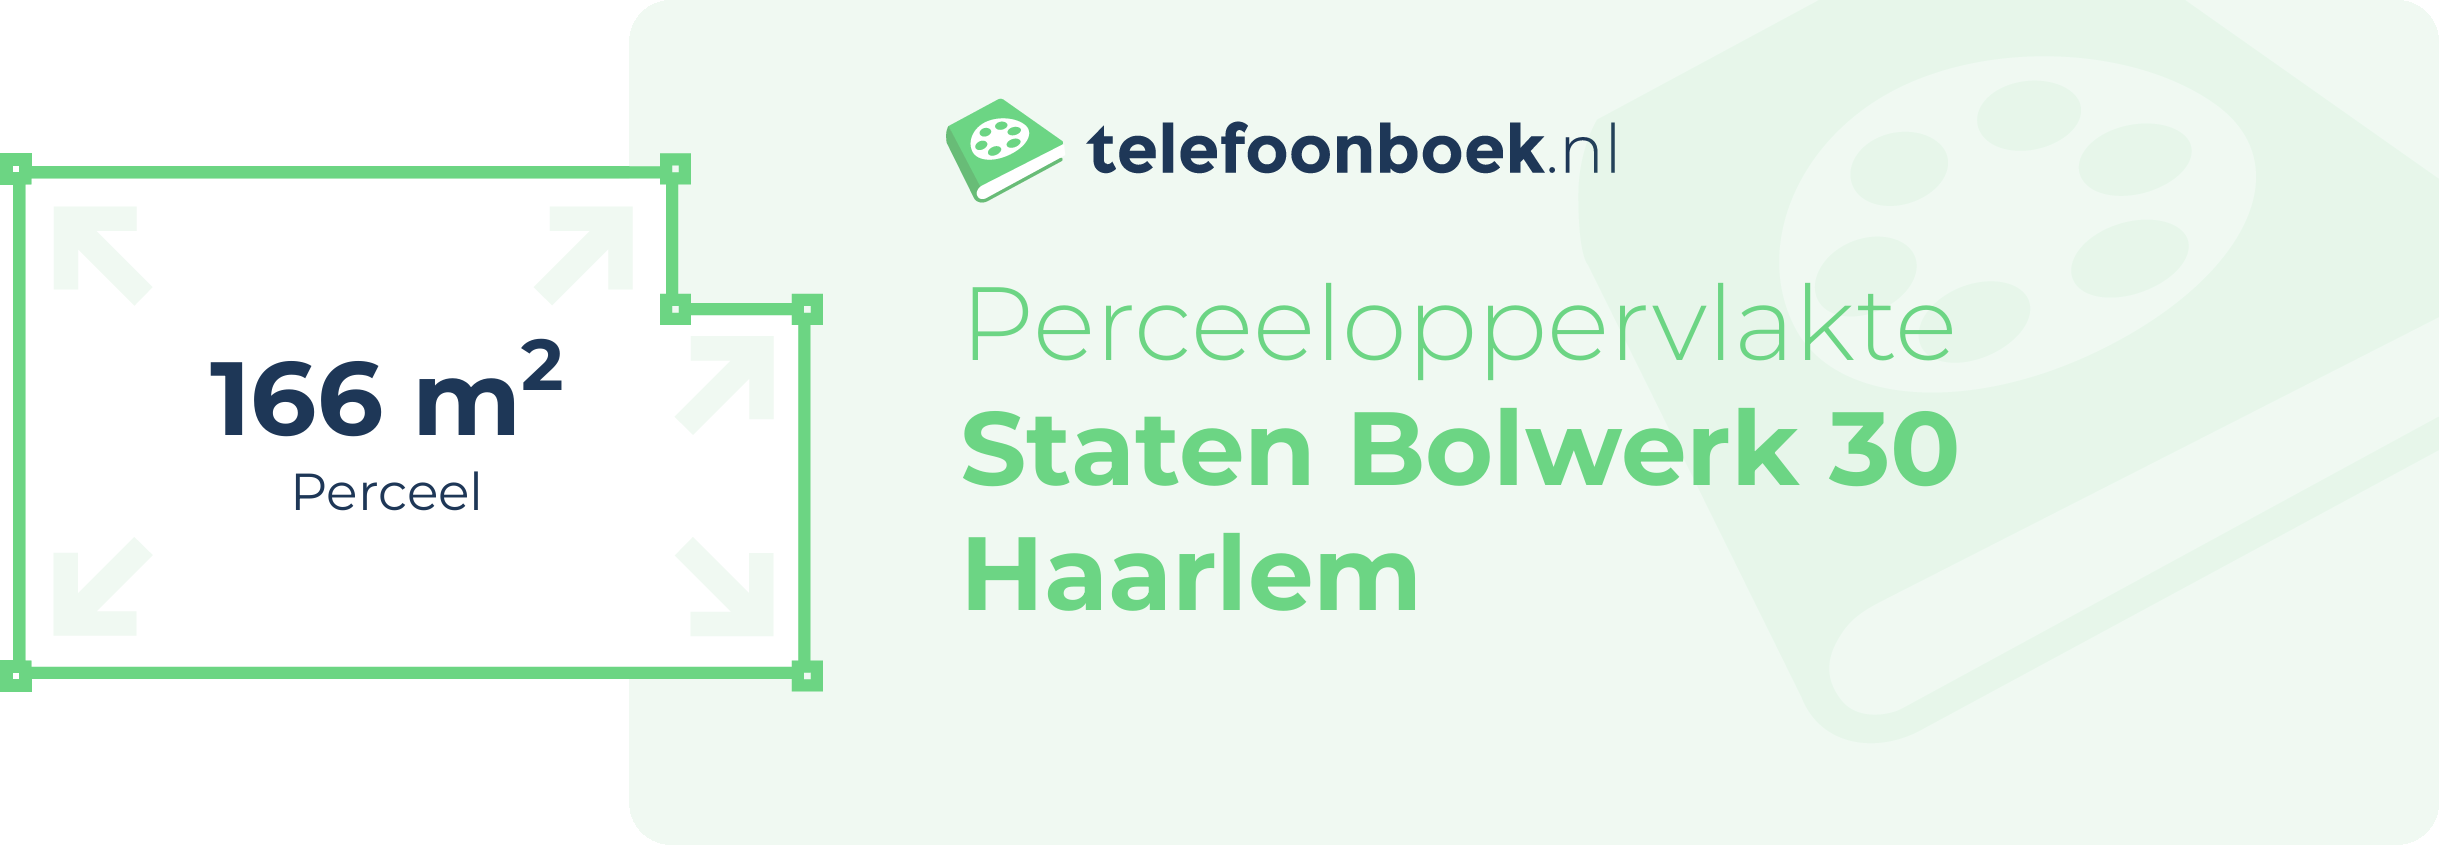 Perceeloppervlakte Staten Bolwerk 30 Haarlem